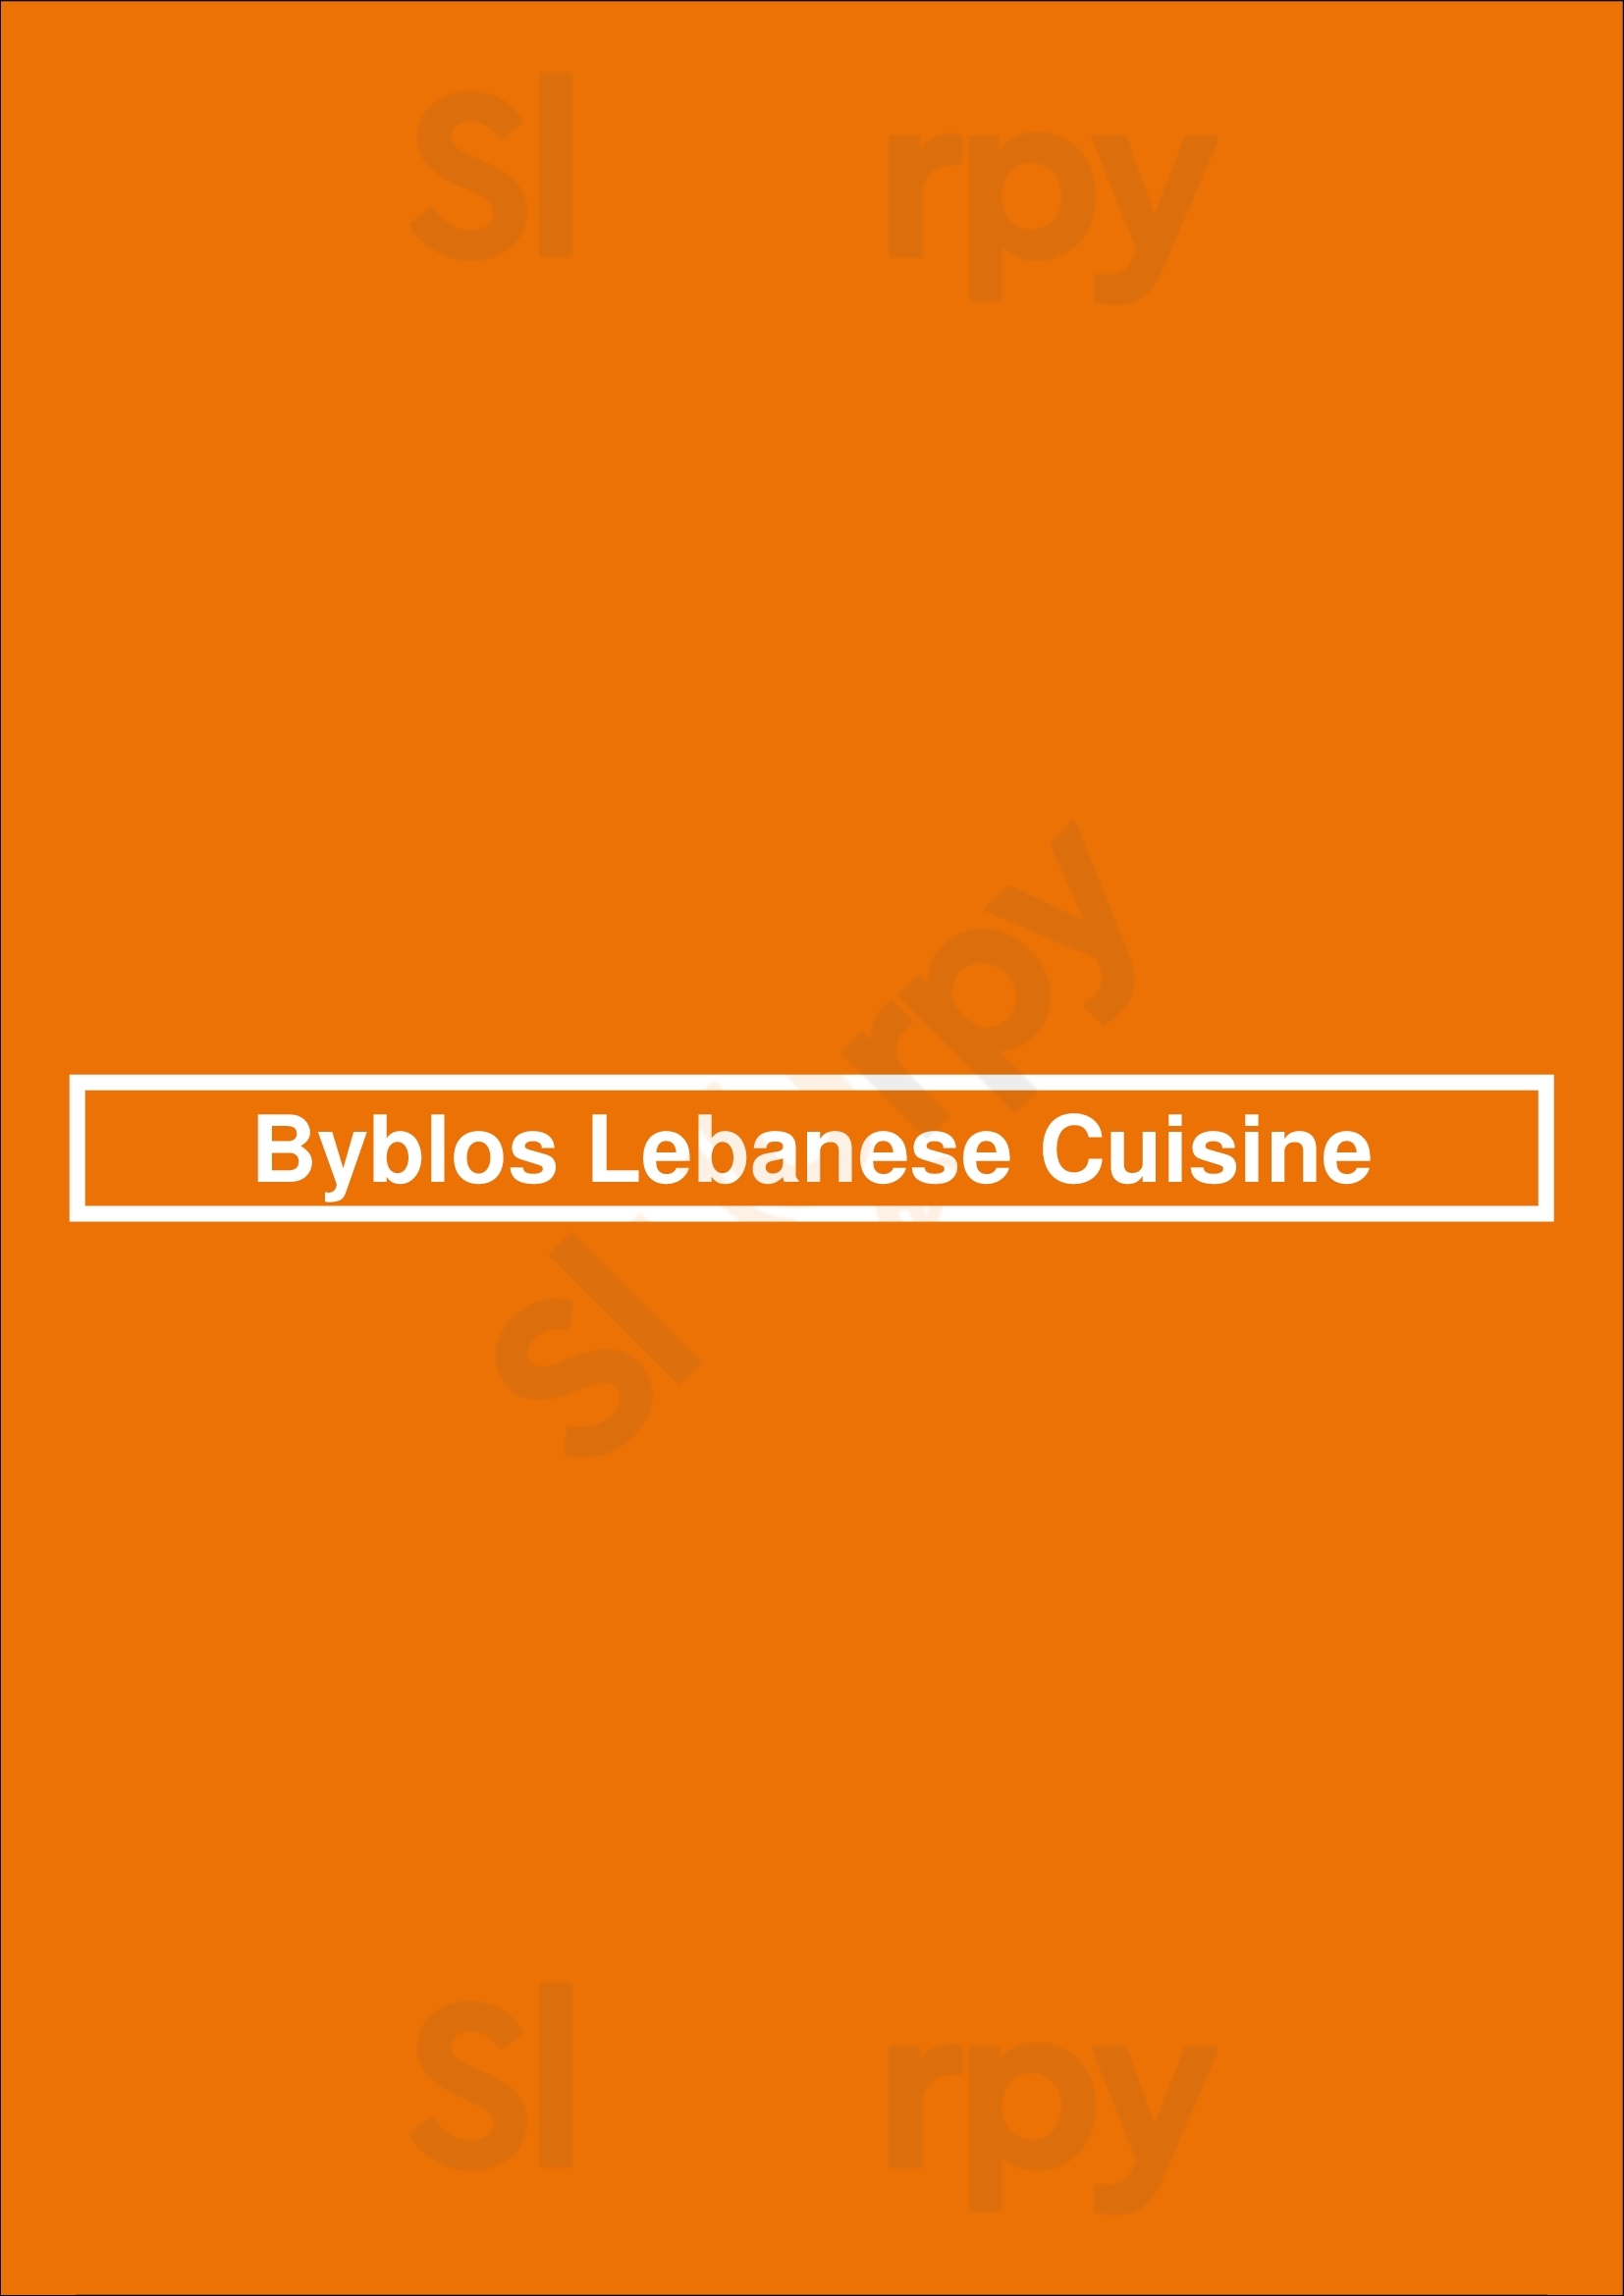 Byblos Lebanese Cuisine Baltimore Menu - 1